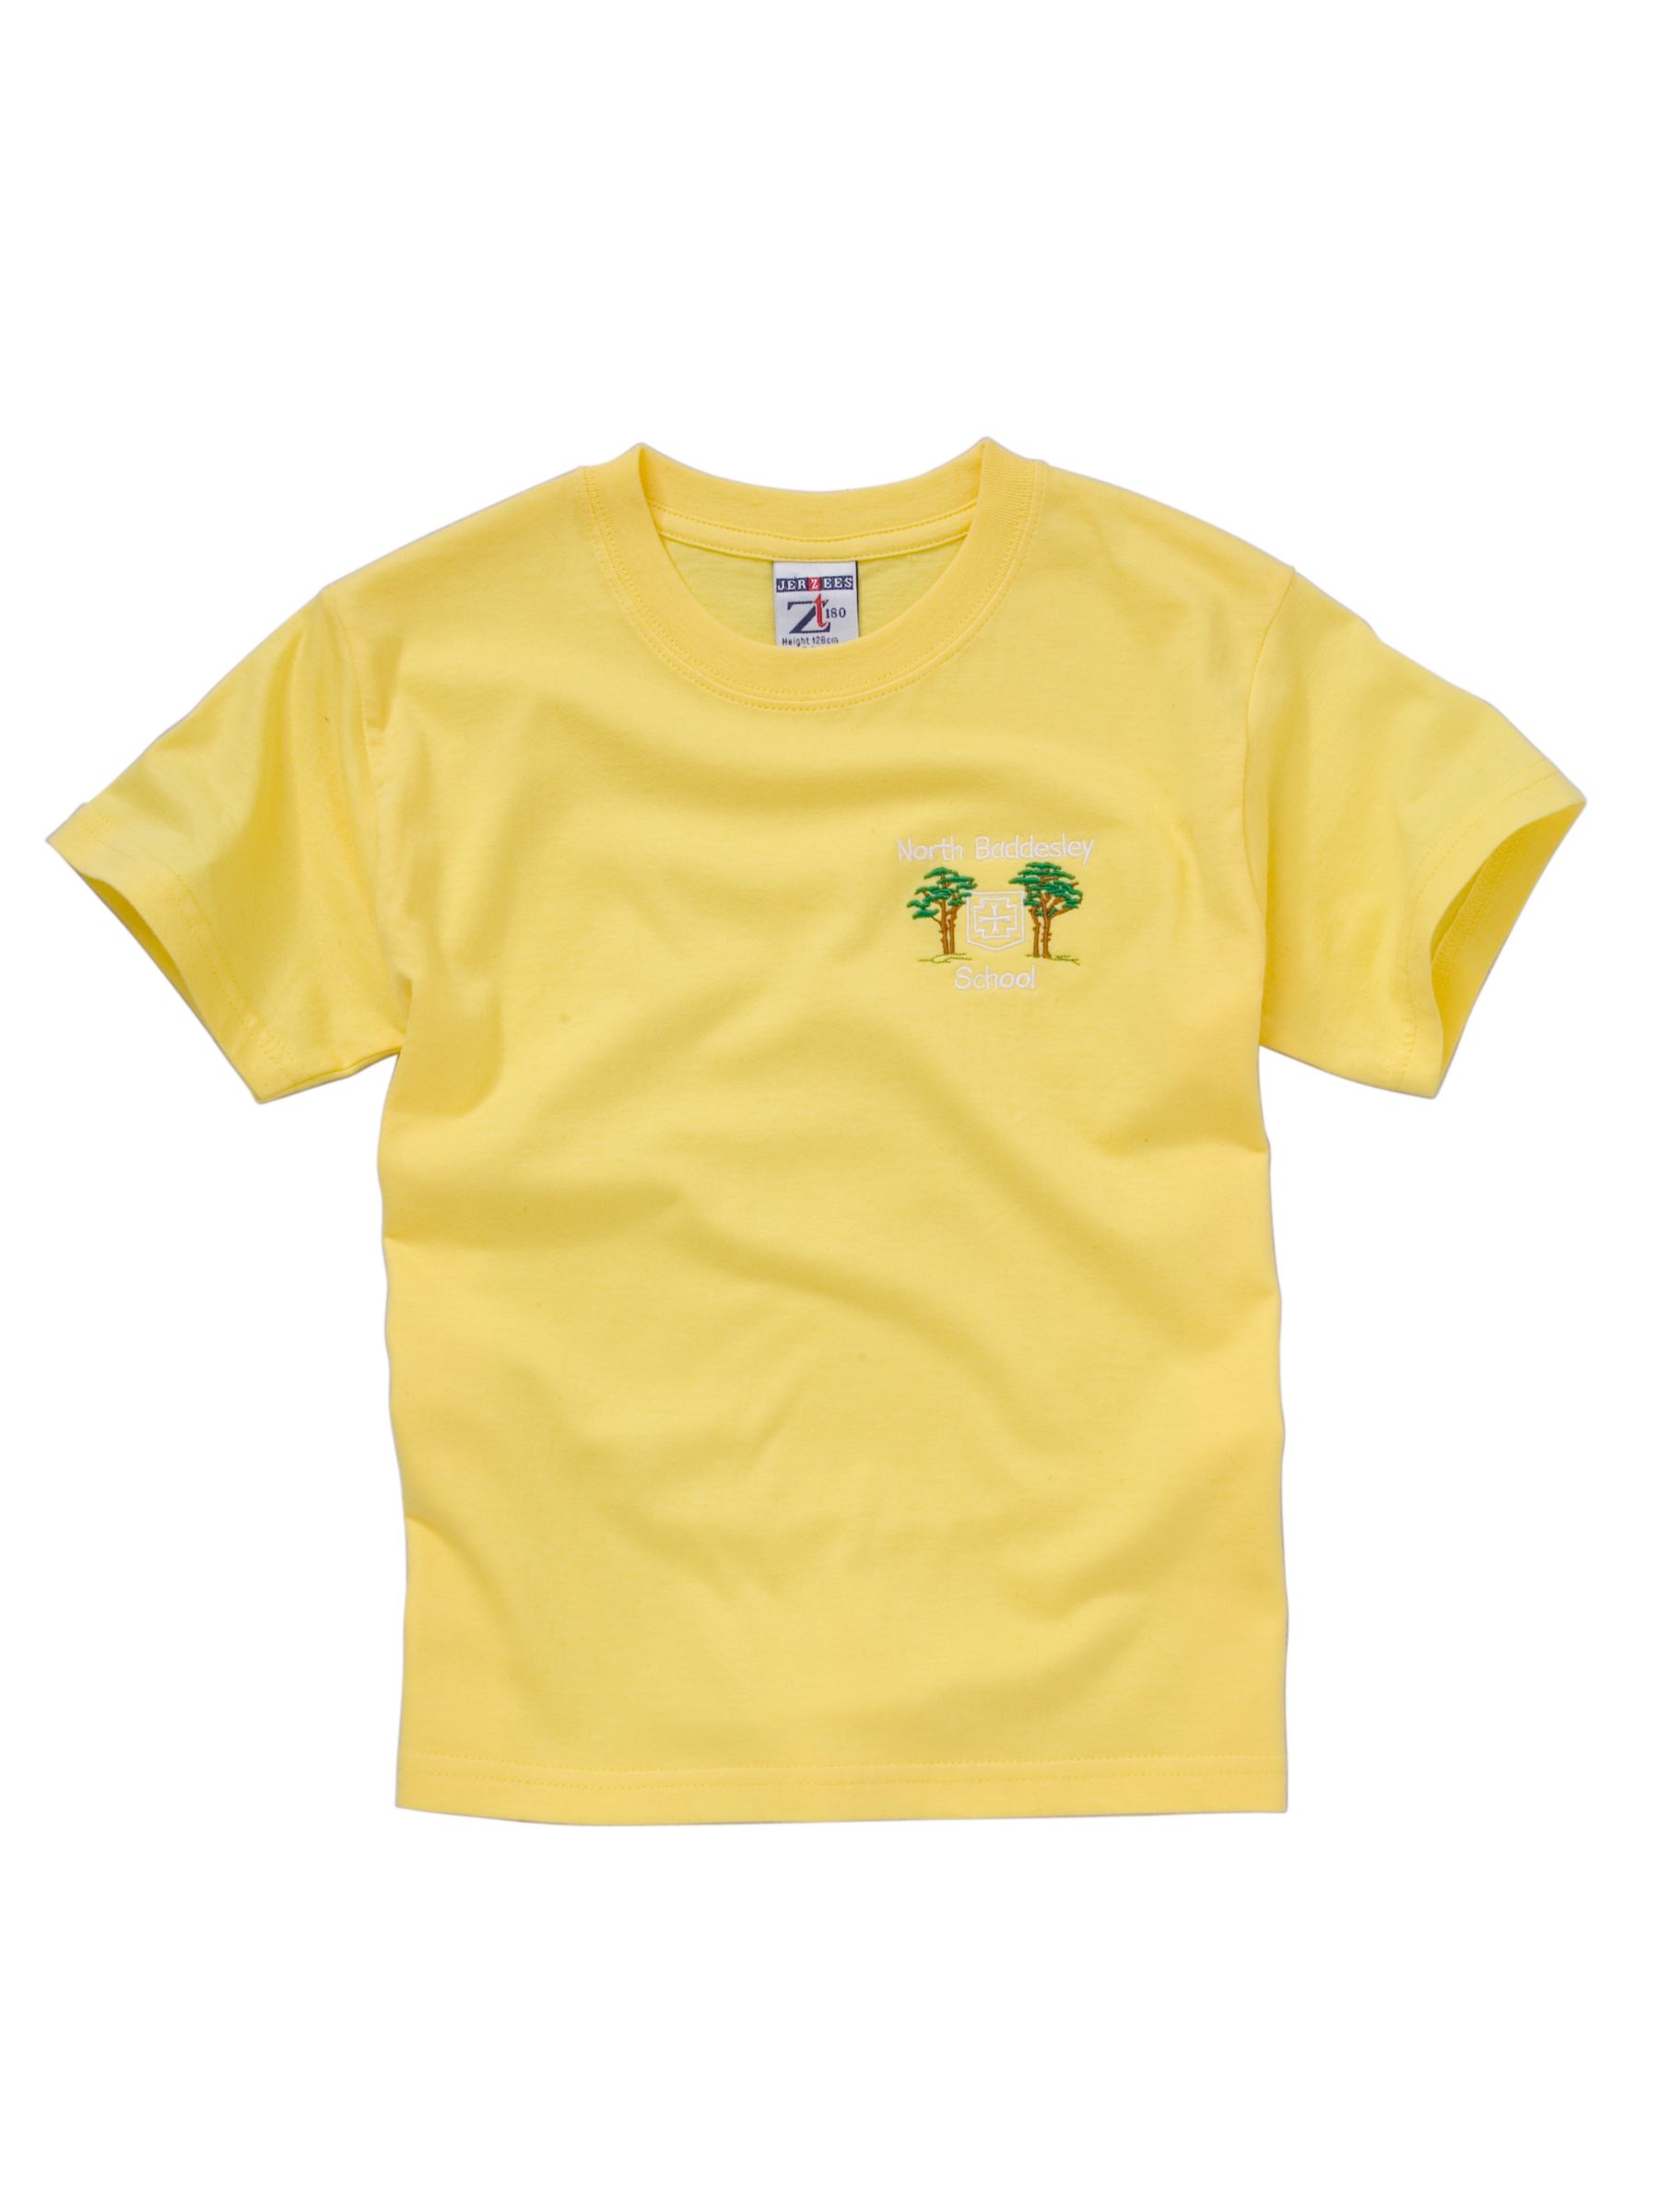 North Baddesley Junior School PE T-Shirt, Yellow